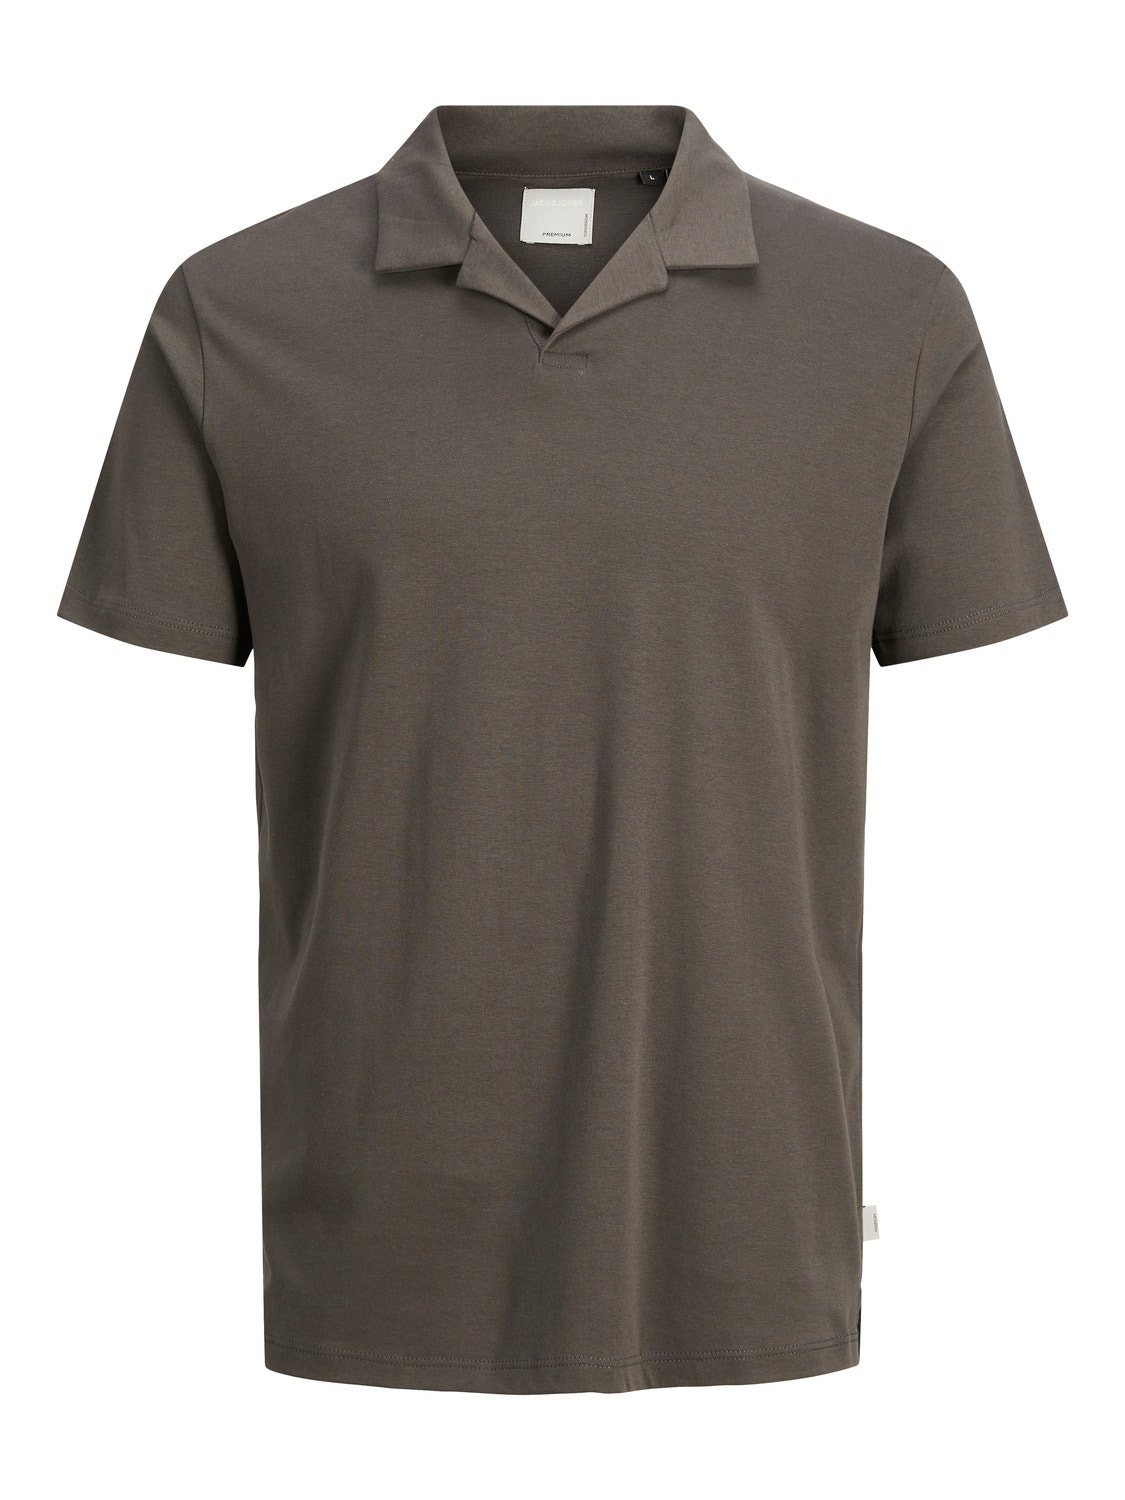 Jack & Jones Einfarbig Hemdkragen T-shirt -Raven/Brown - 12234921